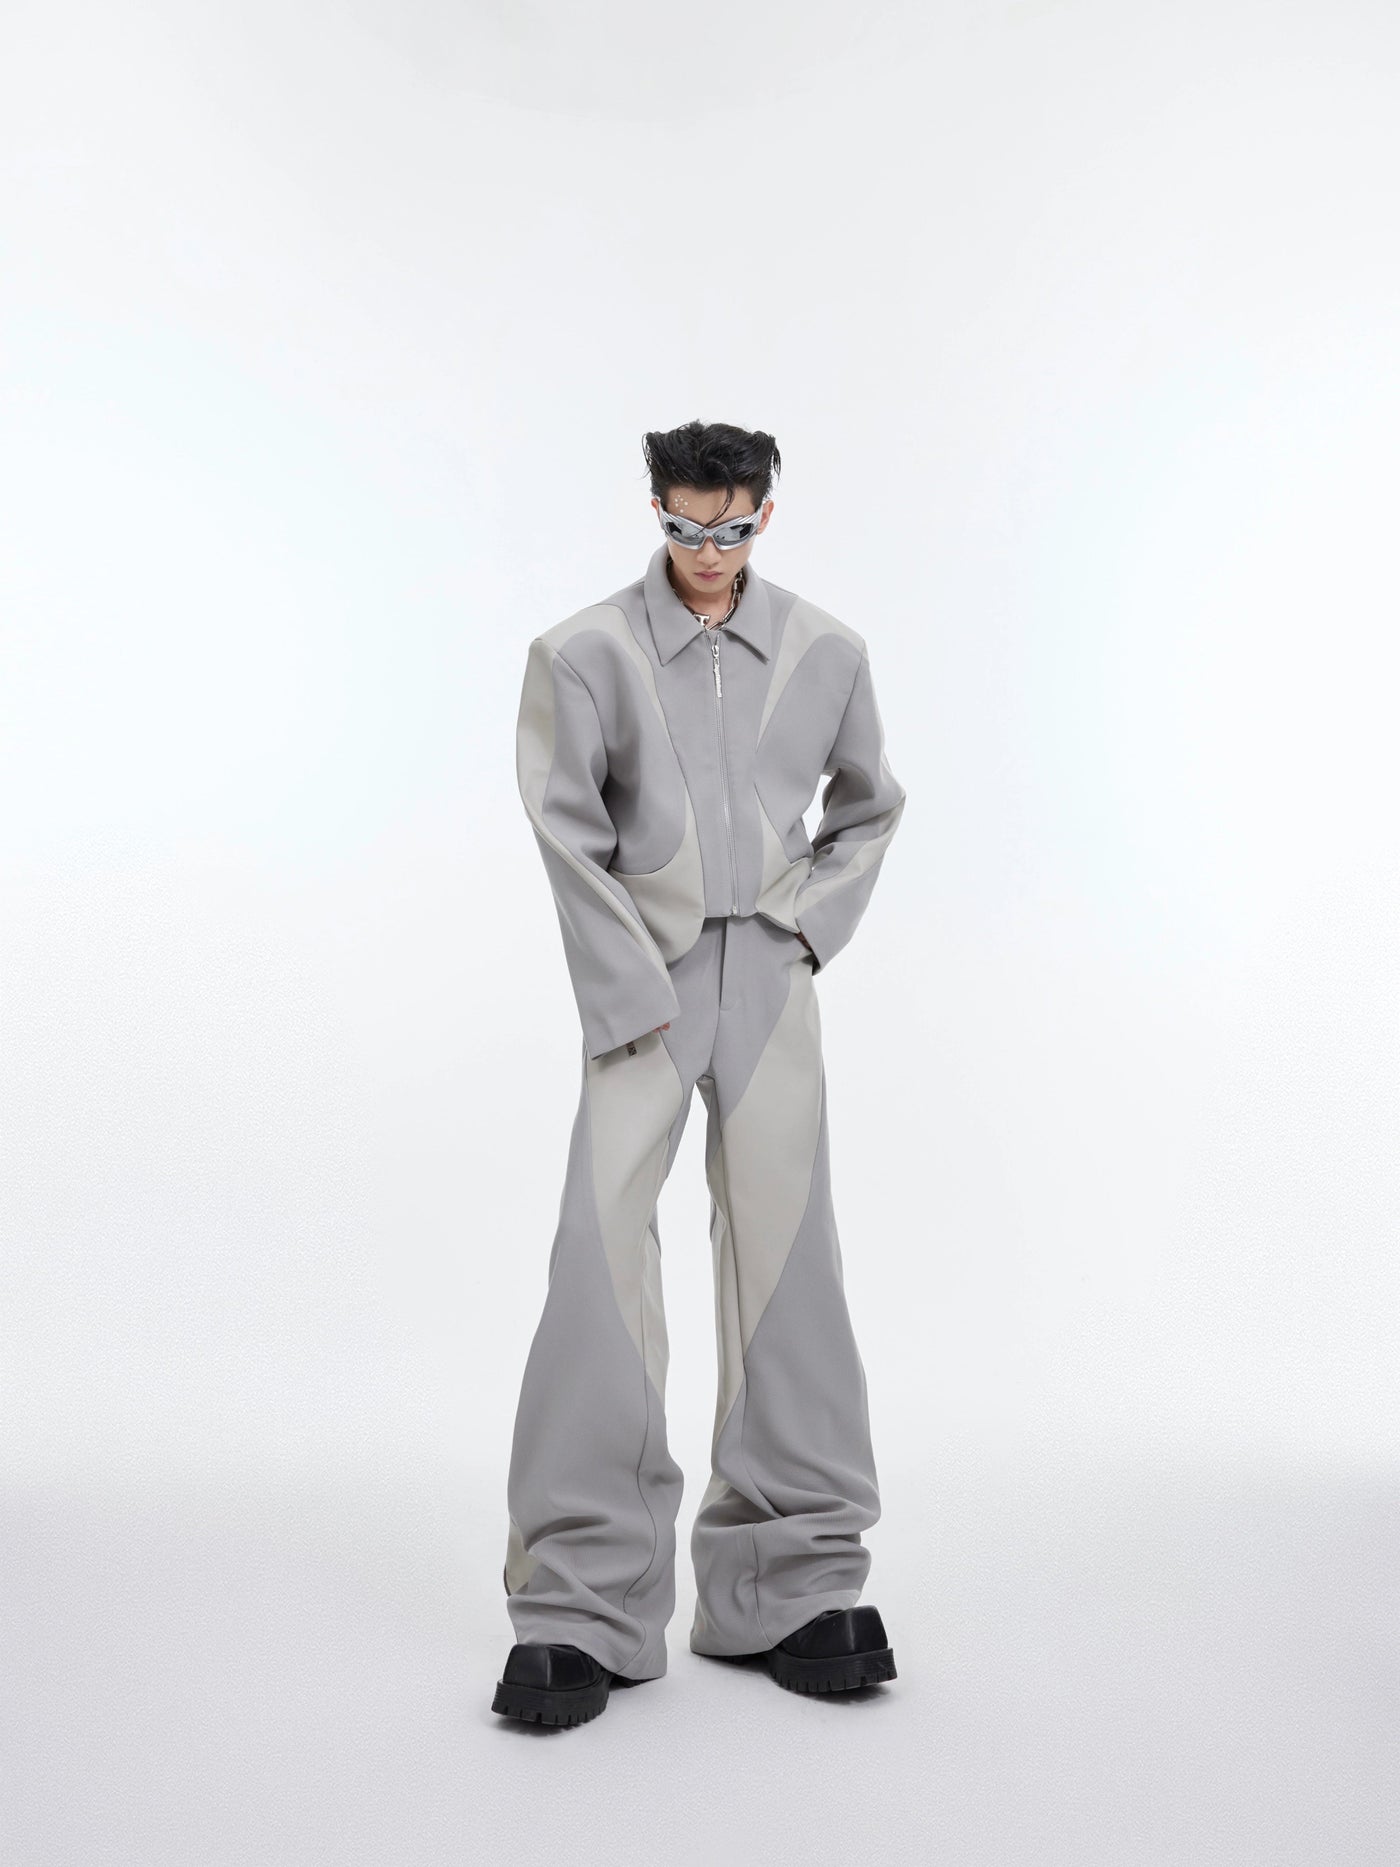 Blades Cropped Jacket & Pants Set Korean Street Fashion Clothing Set By Argue Culture Shop Online at OH Vault